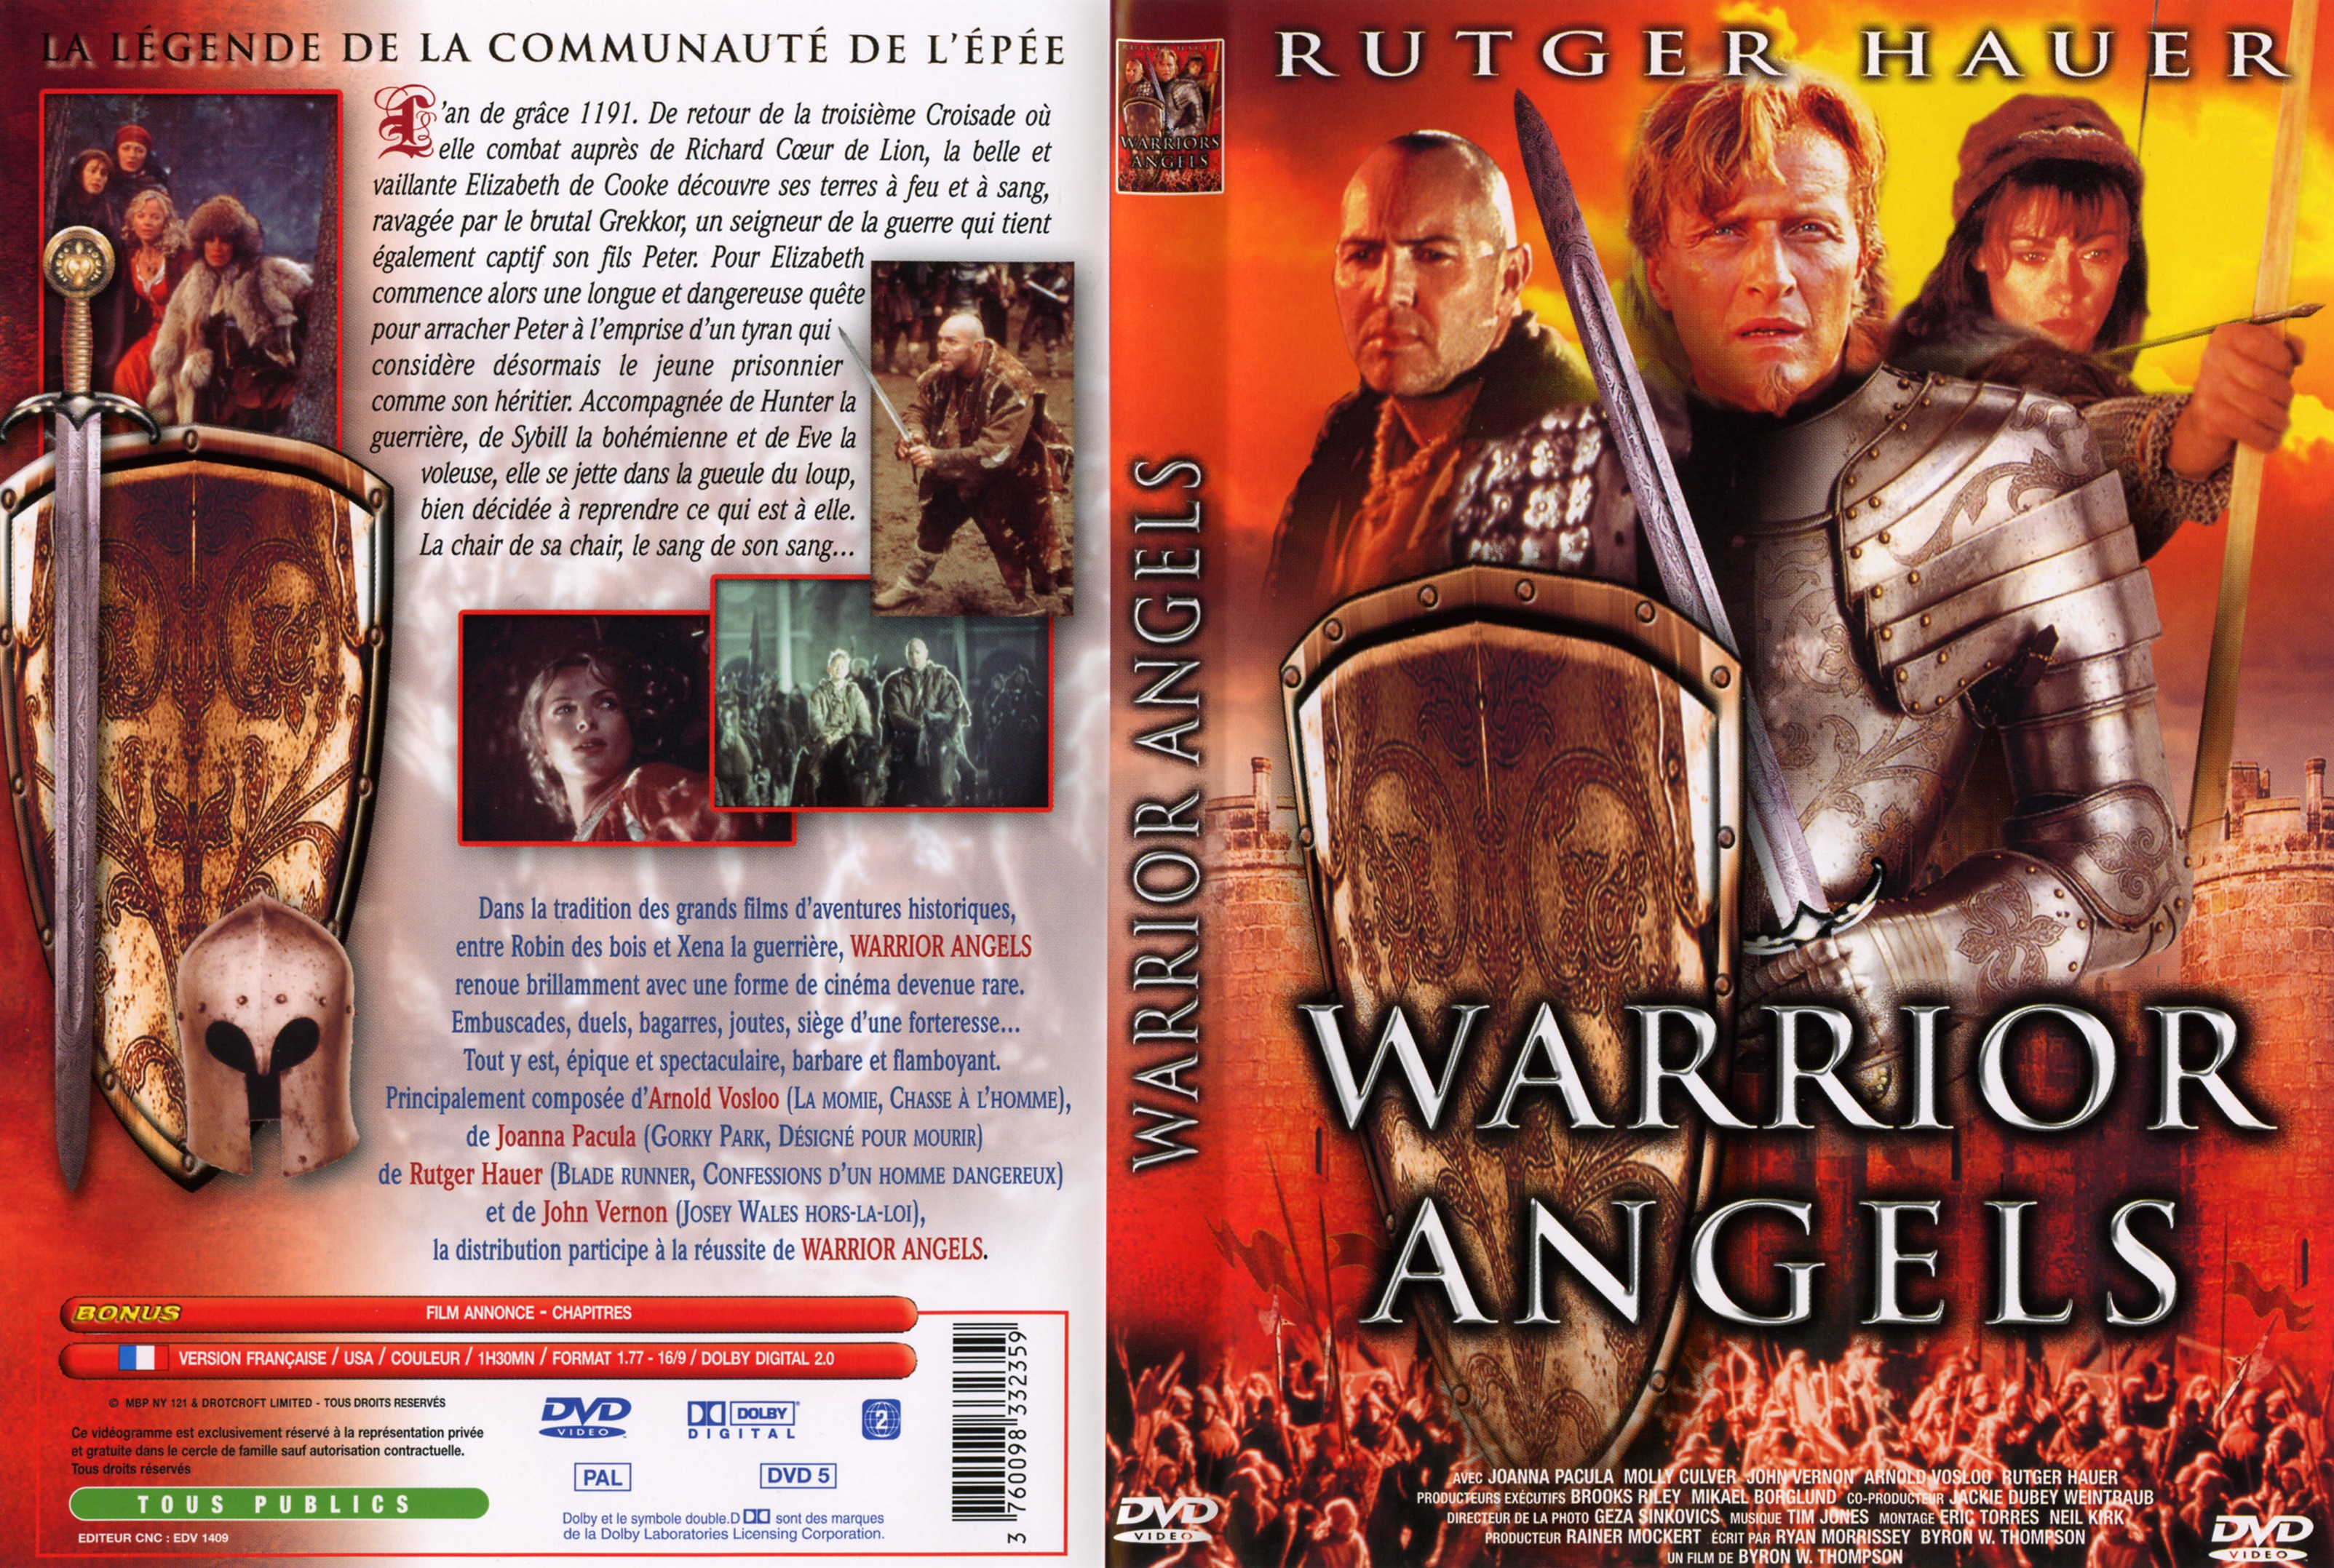 Jaquette DVD Warrior Angels